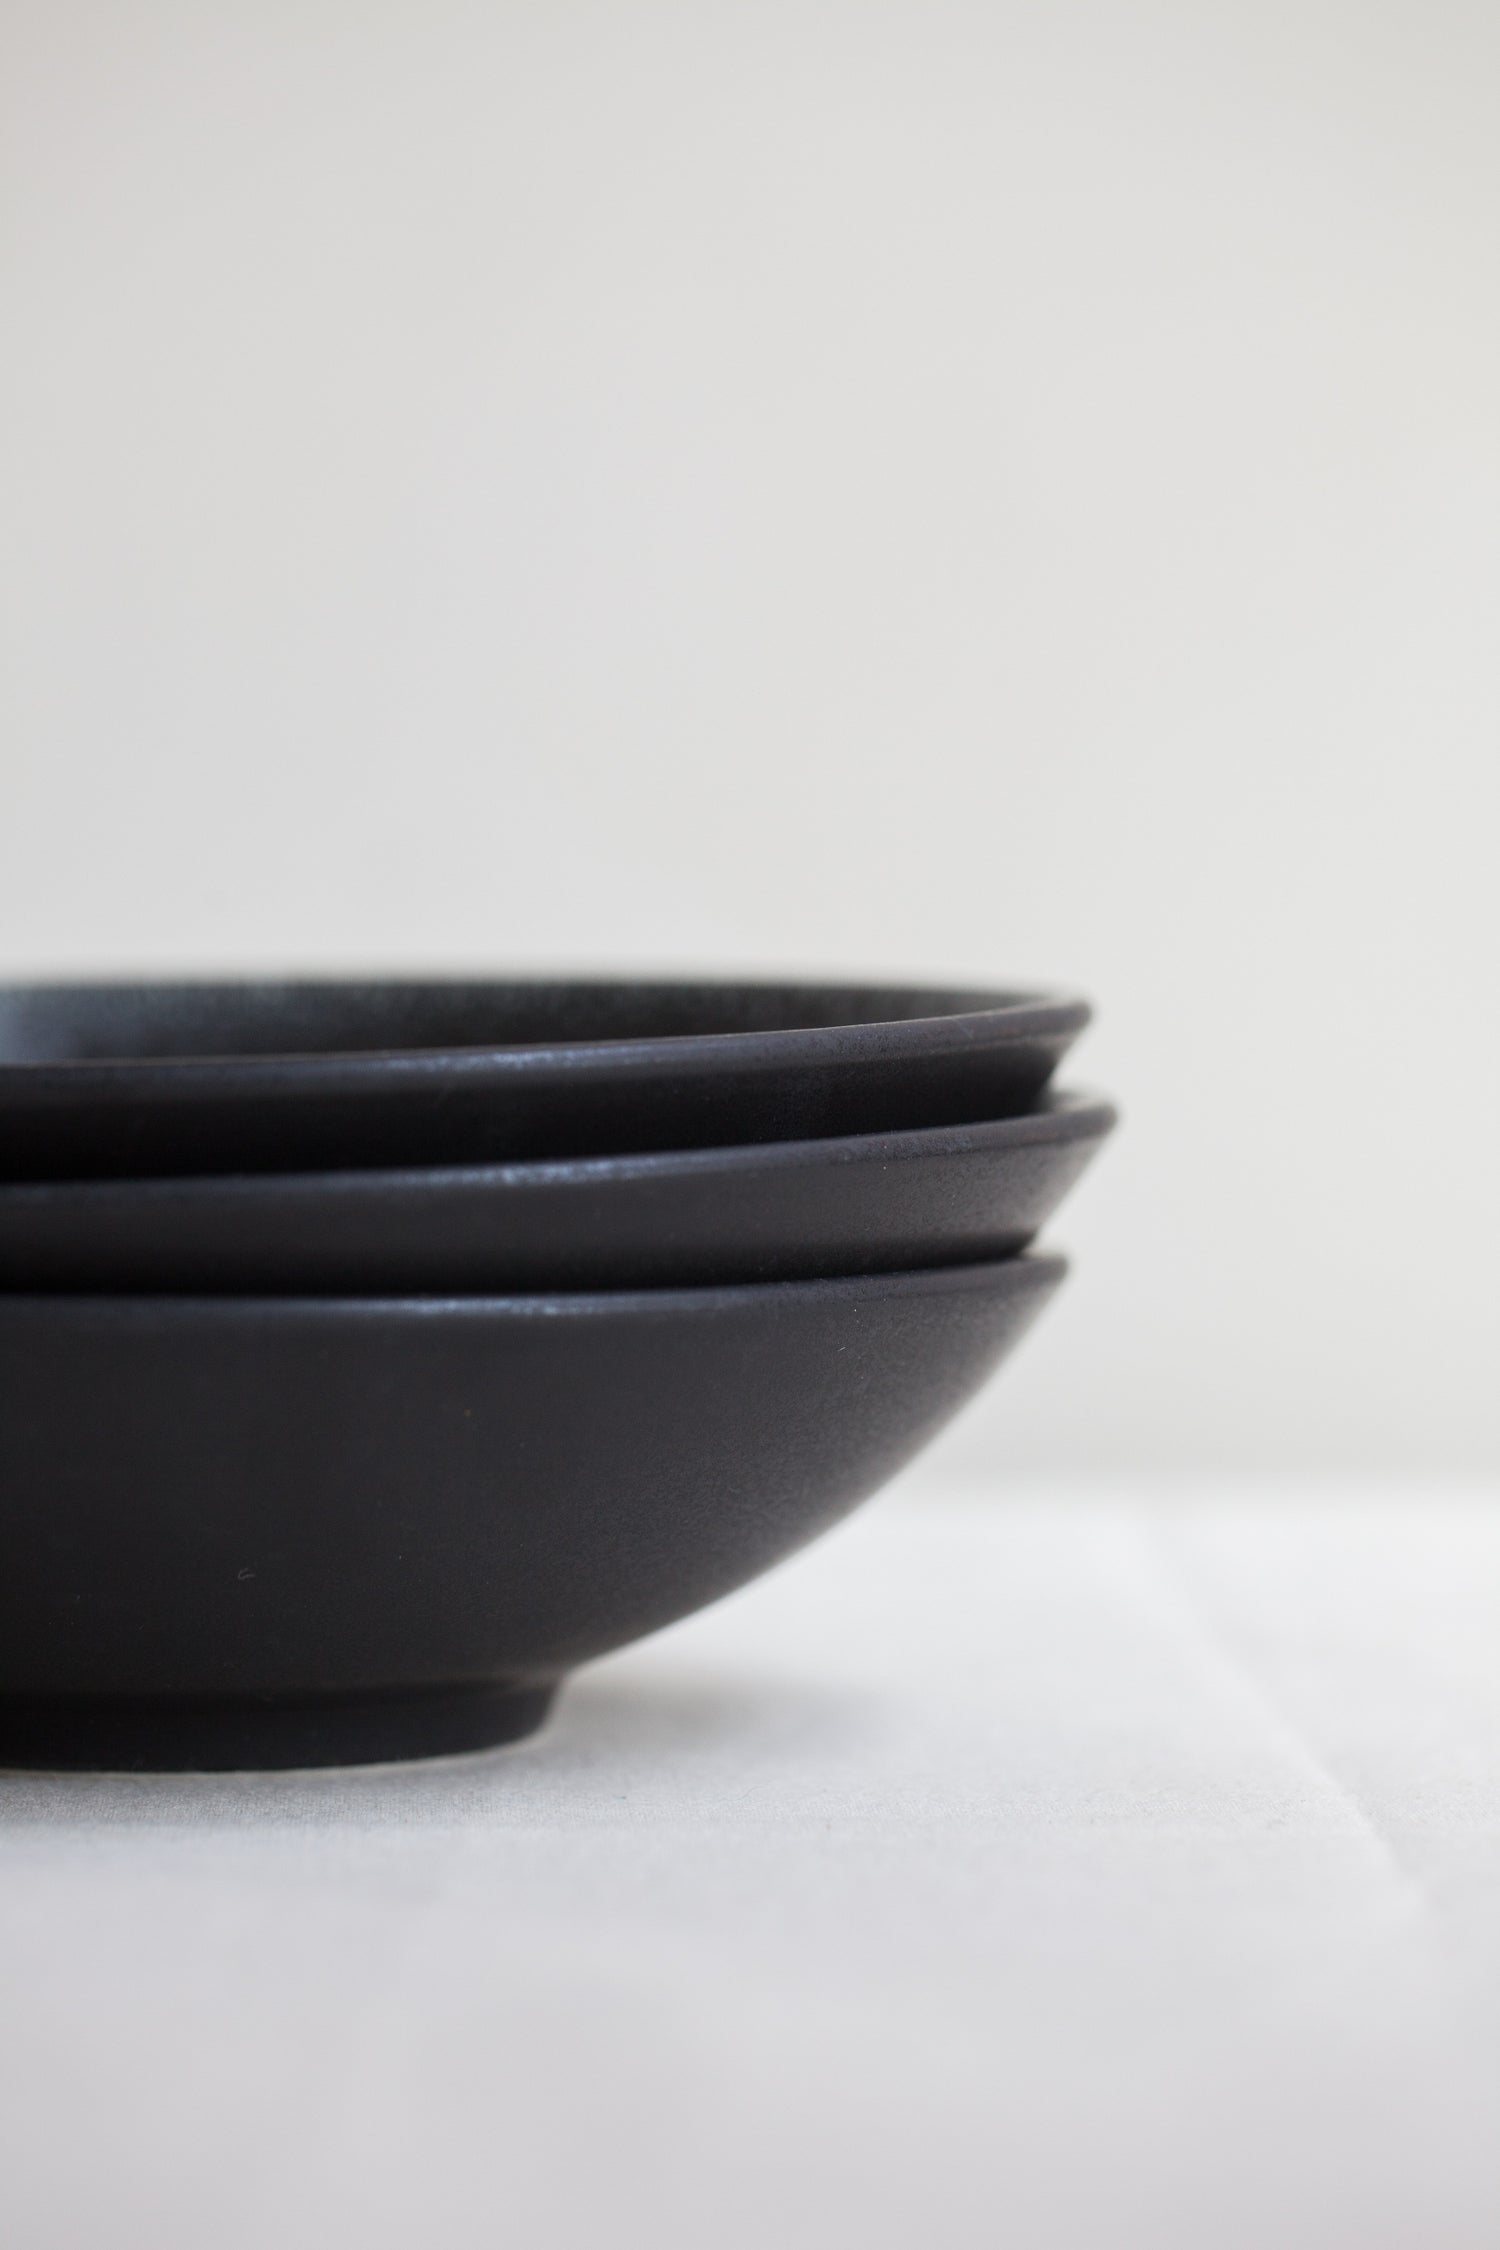 Tourron Soup Plate by Jars Ceramics detail photo